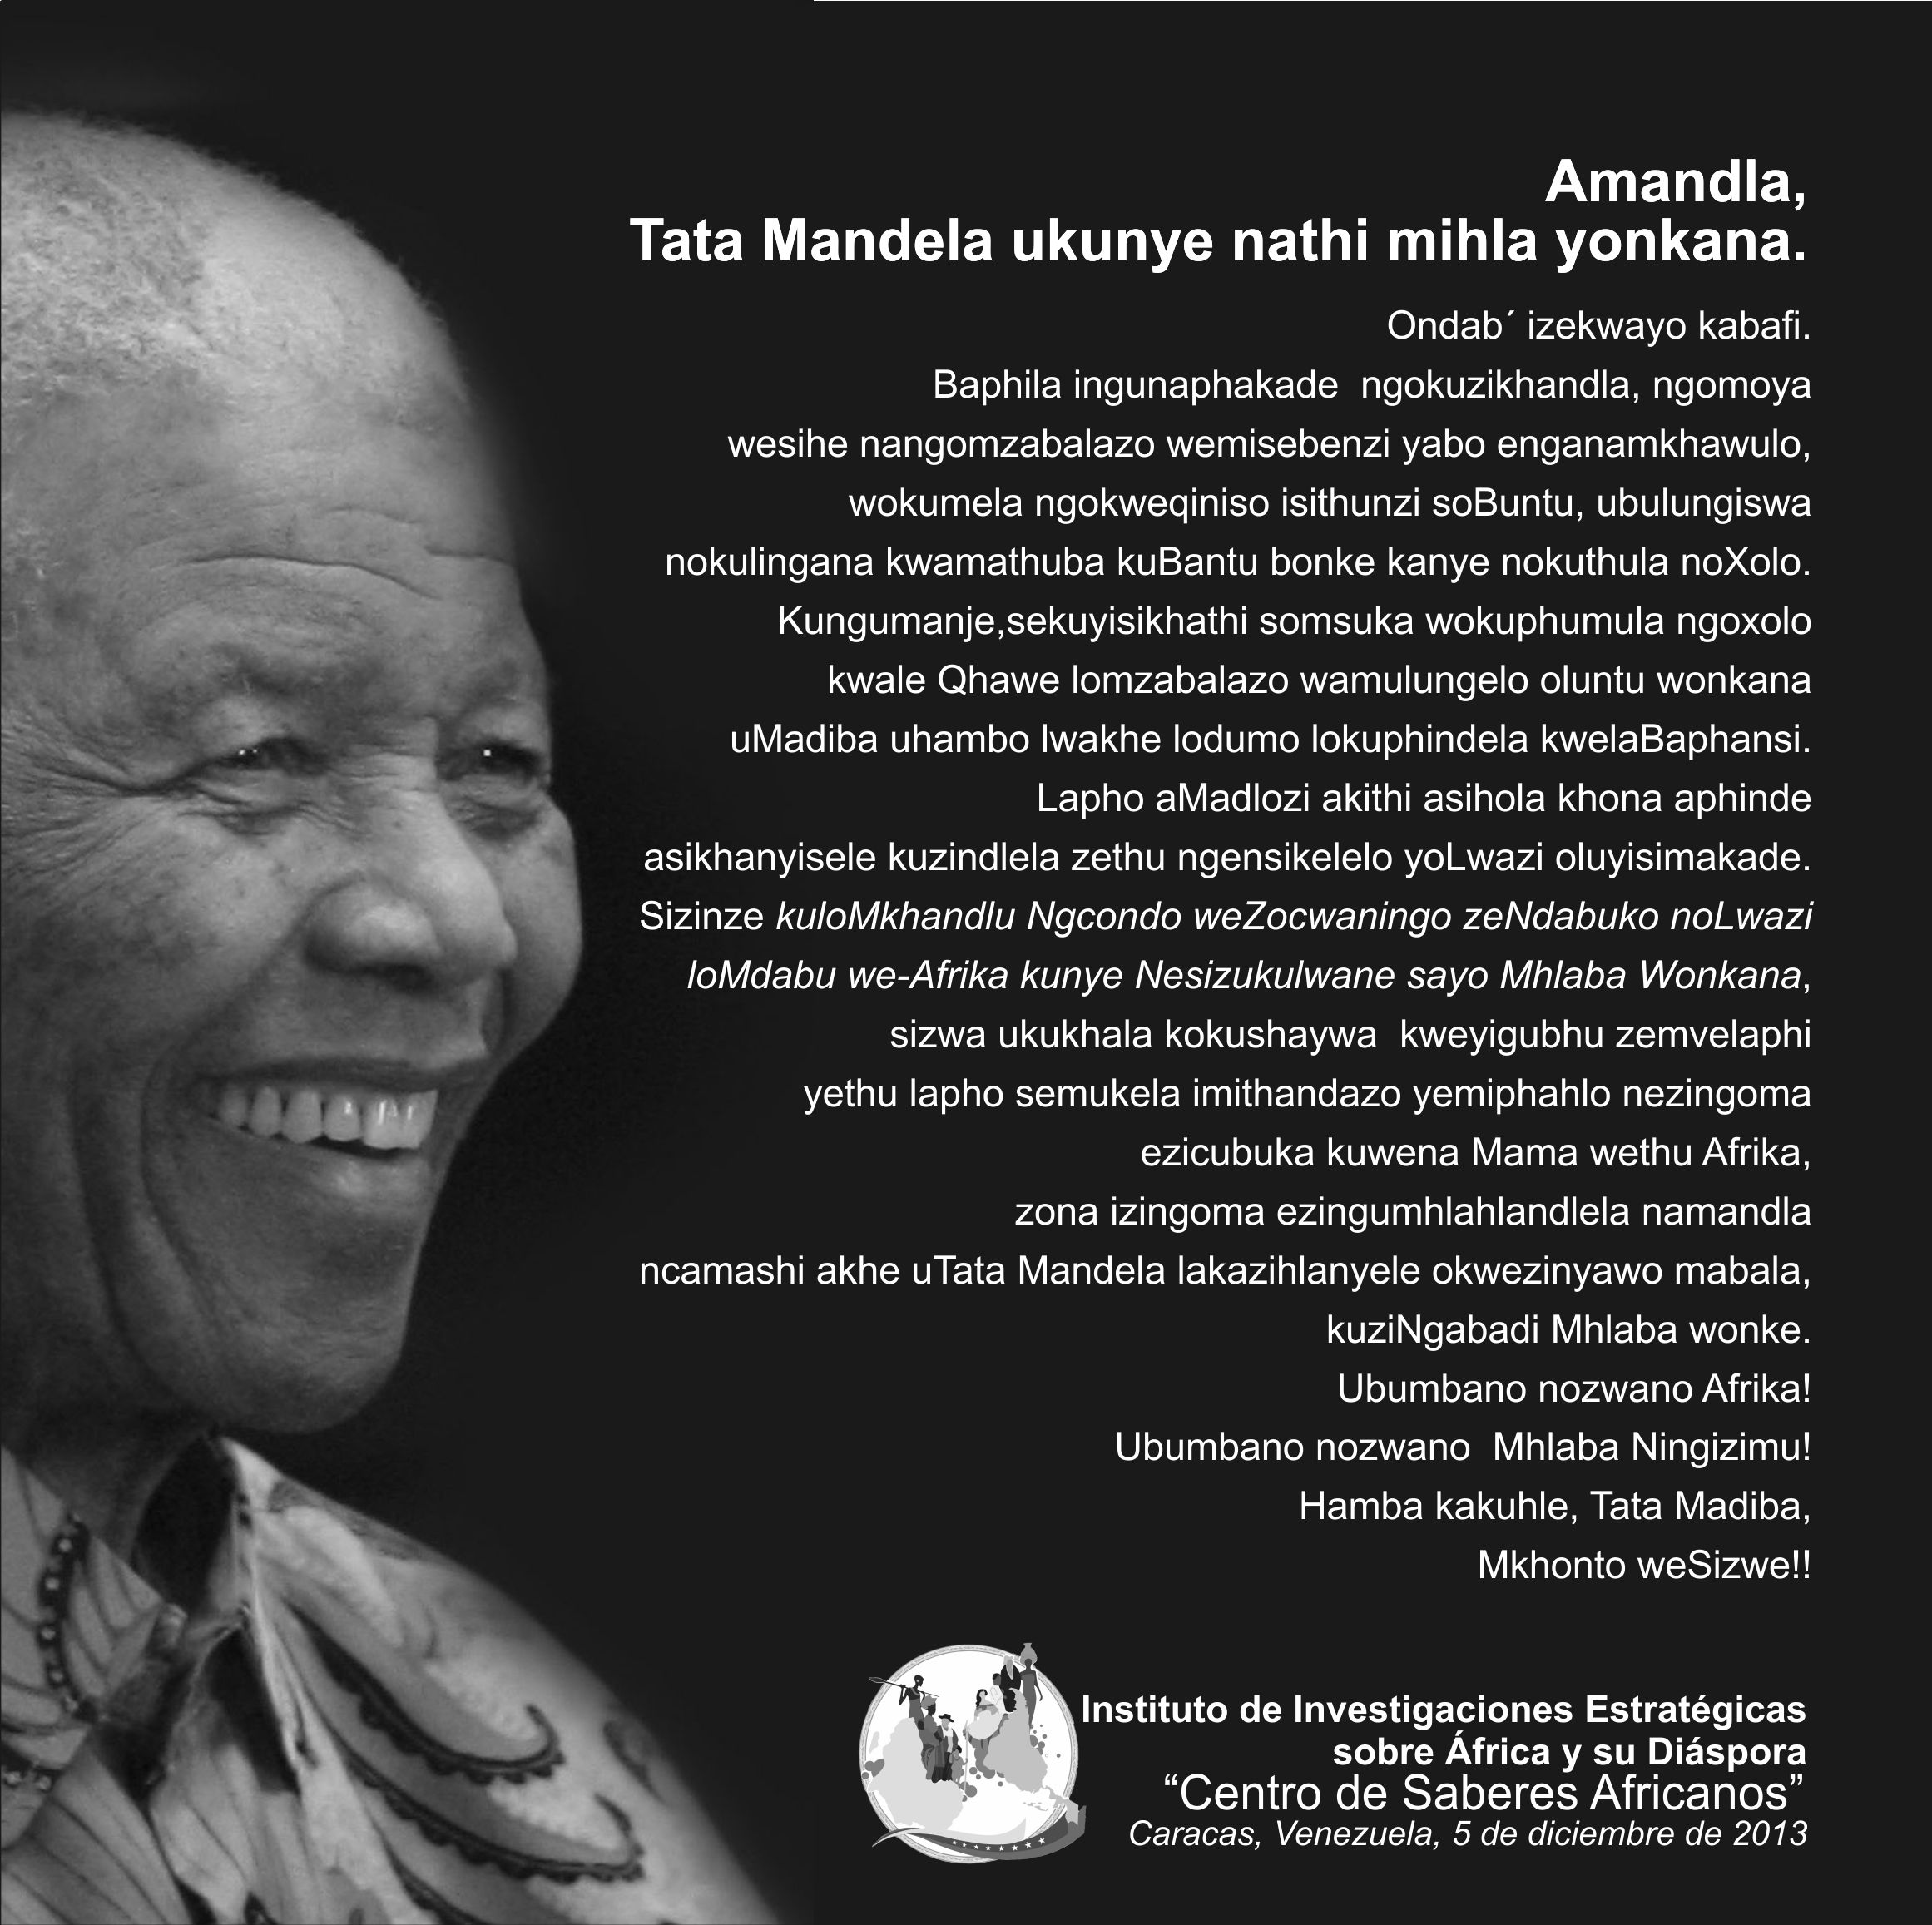 Mandela zulu